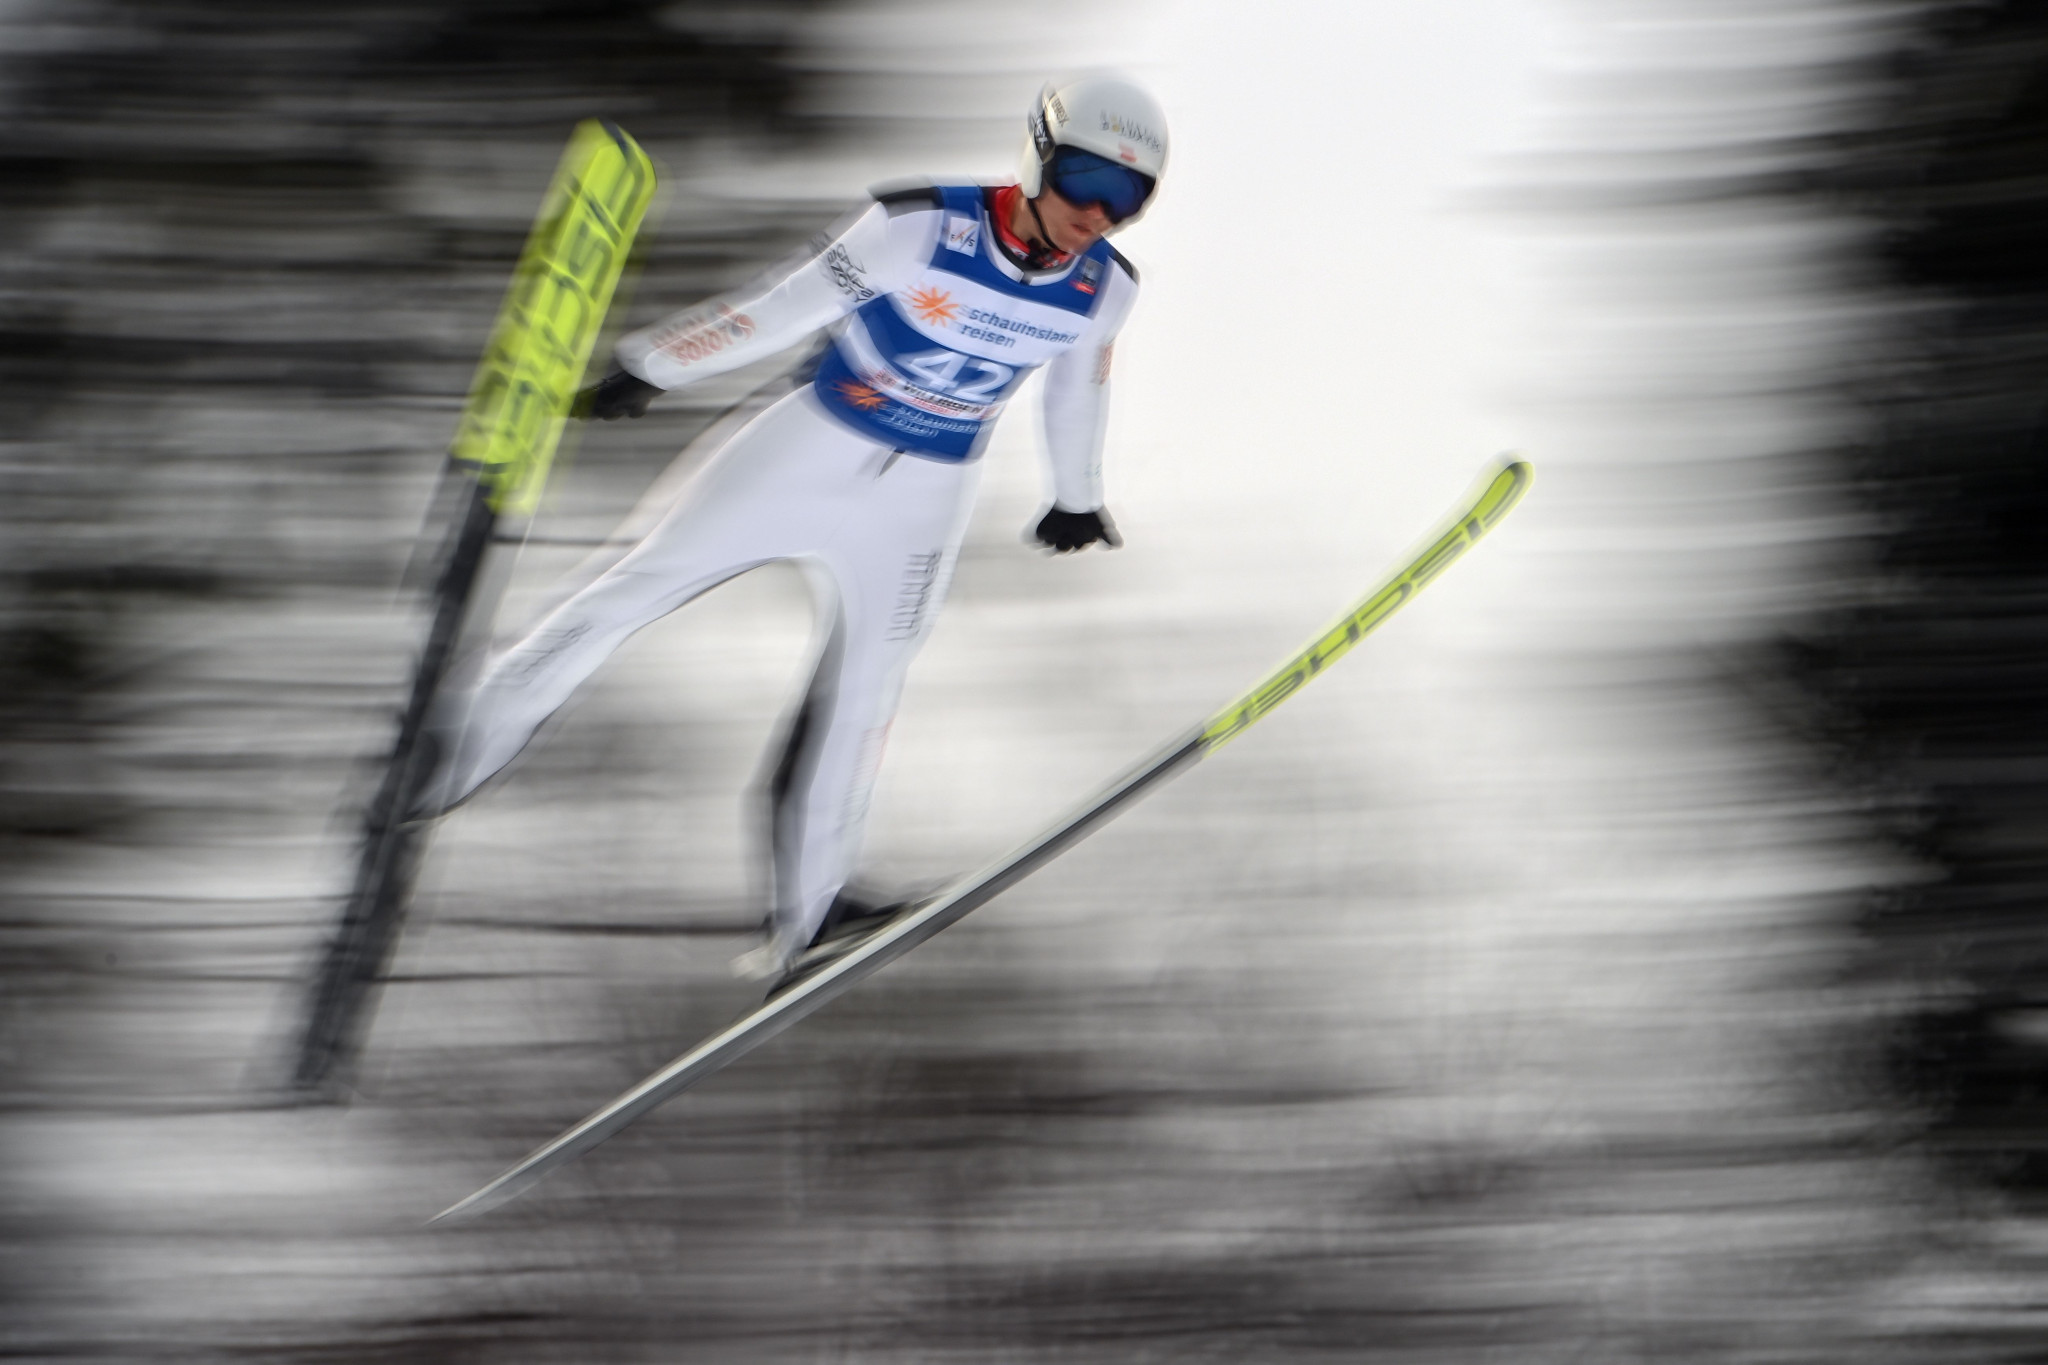 Stękała tops qualification at FIS Ski Jumping World Cup in Willingen